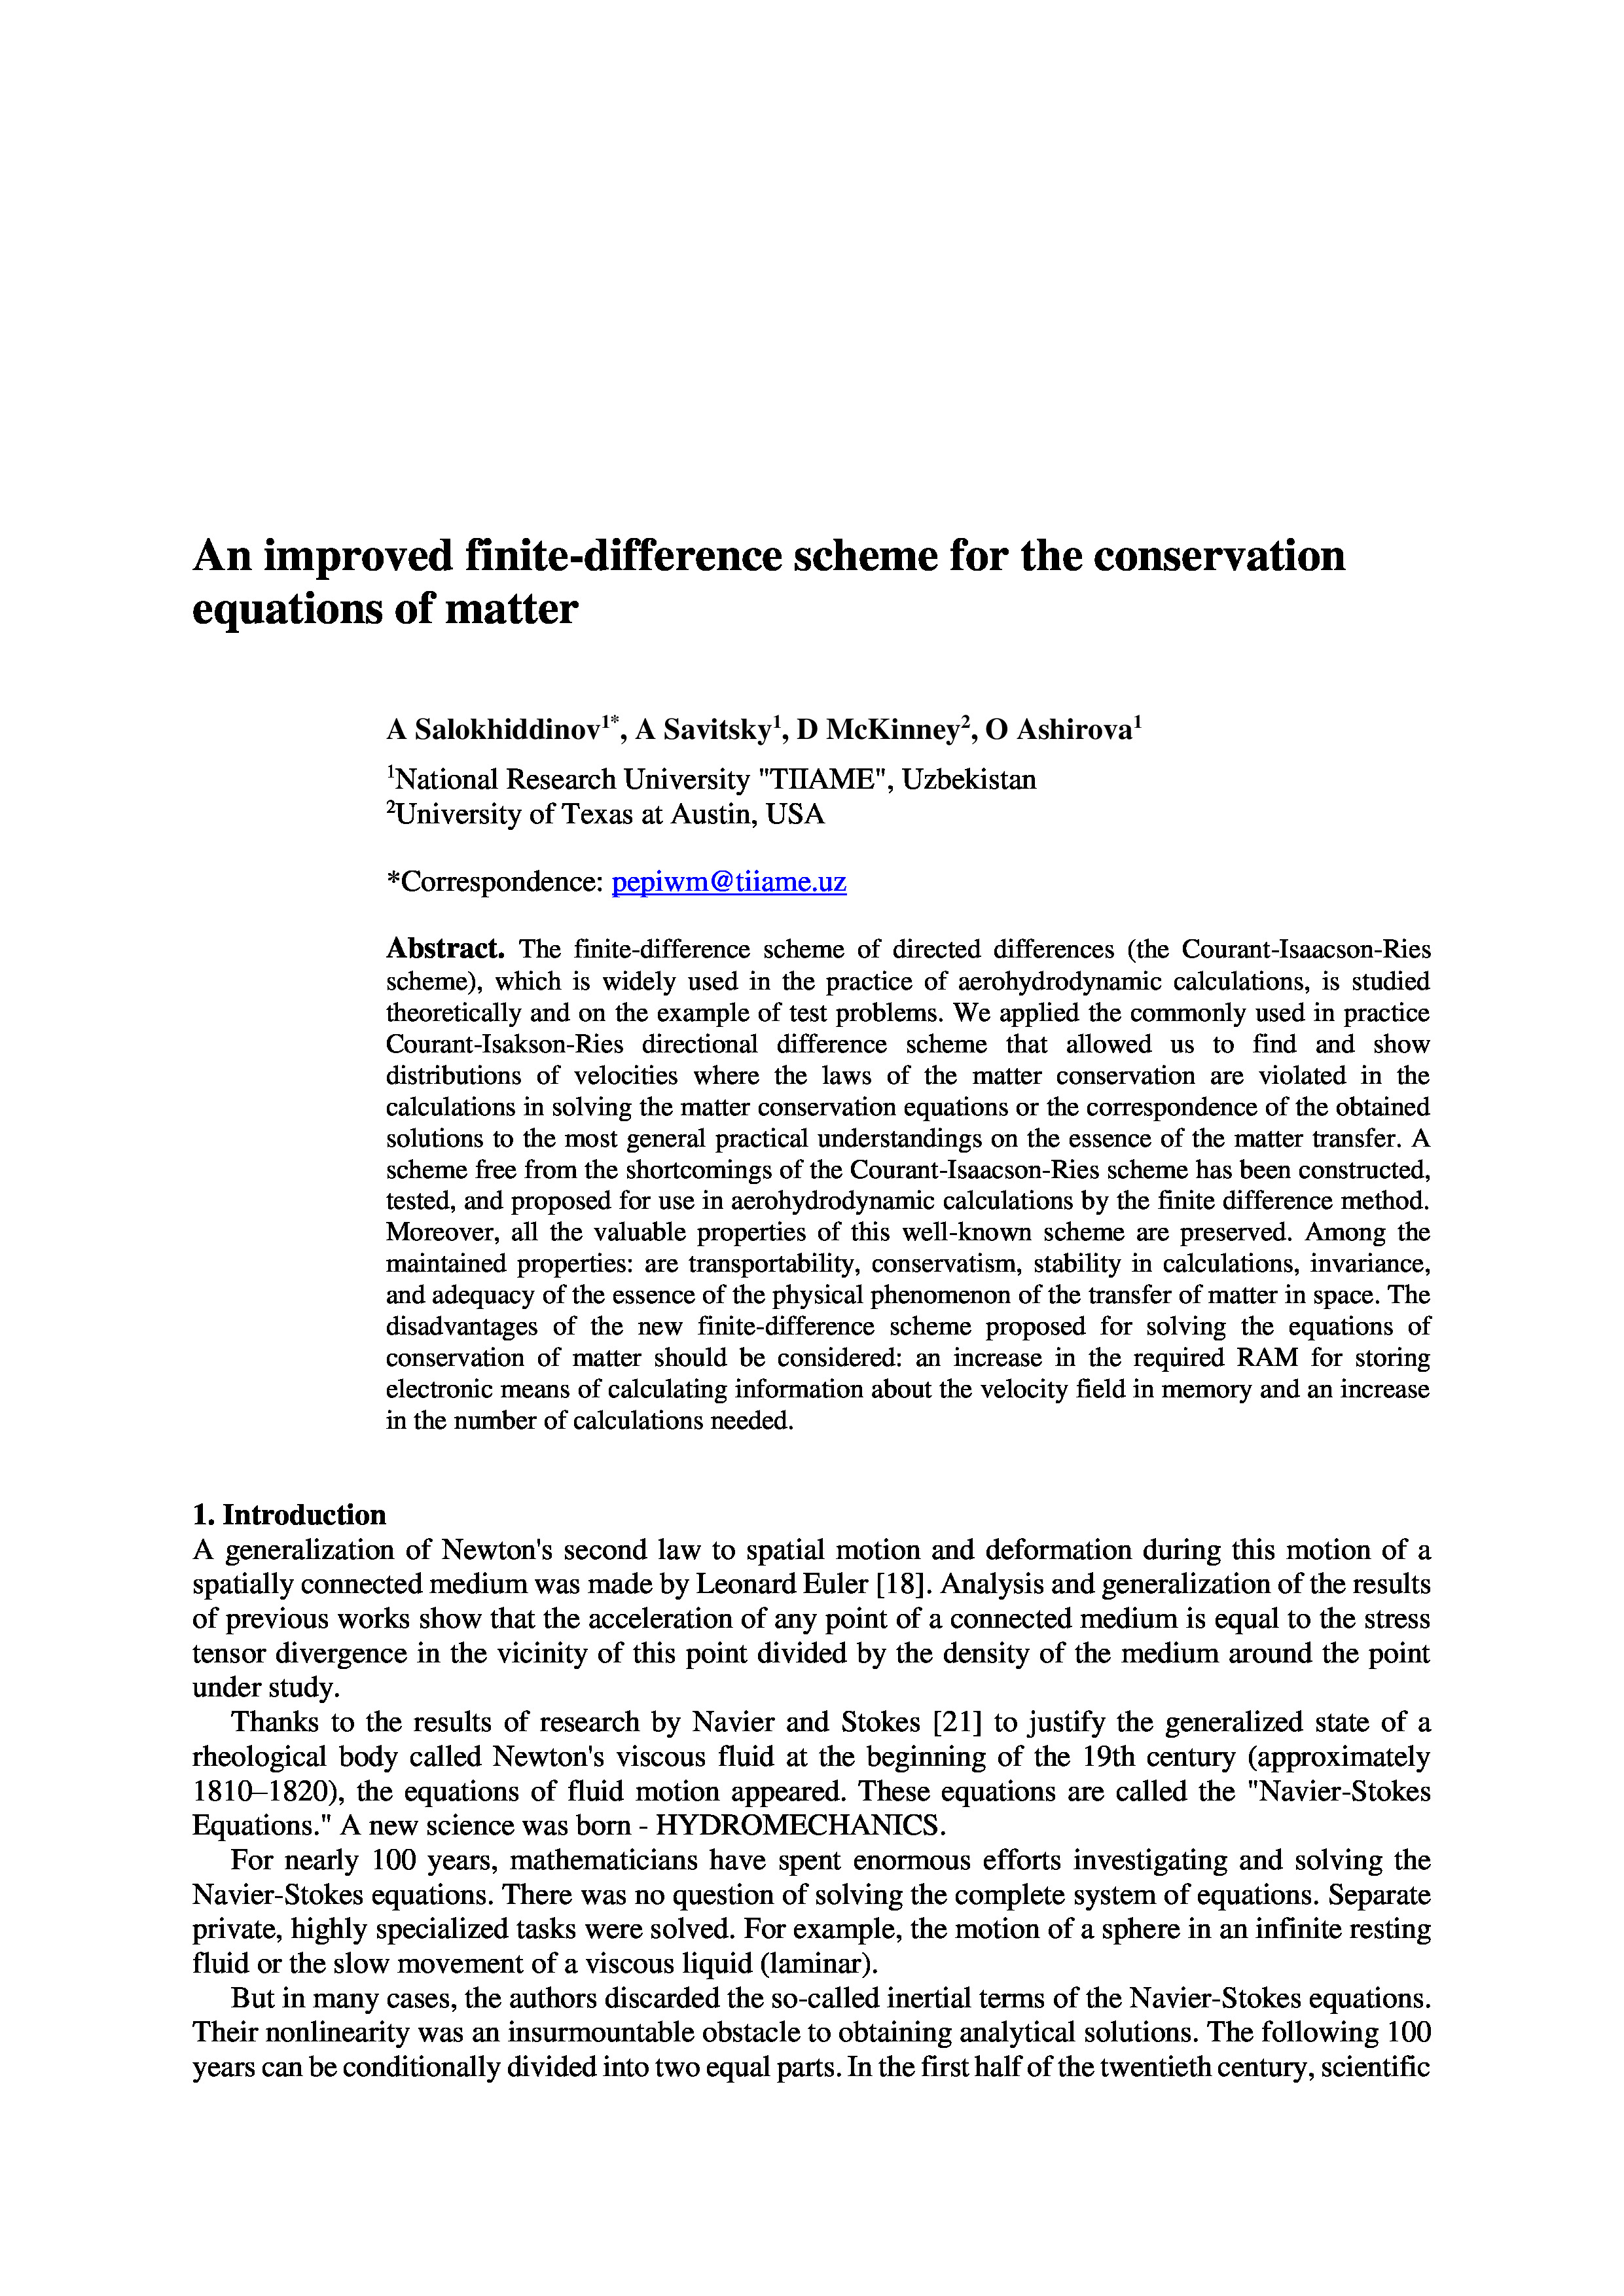 An improved finite-difference scheme for the conservation equations of matter | A.Salokhiddinov, A.Savitsky, D.McKinney, O.Ashirova